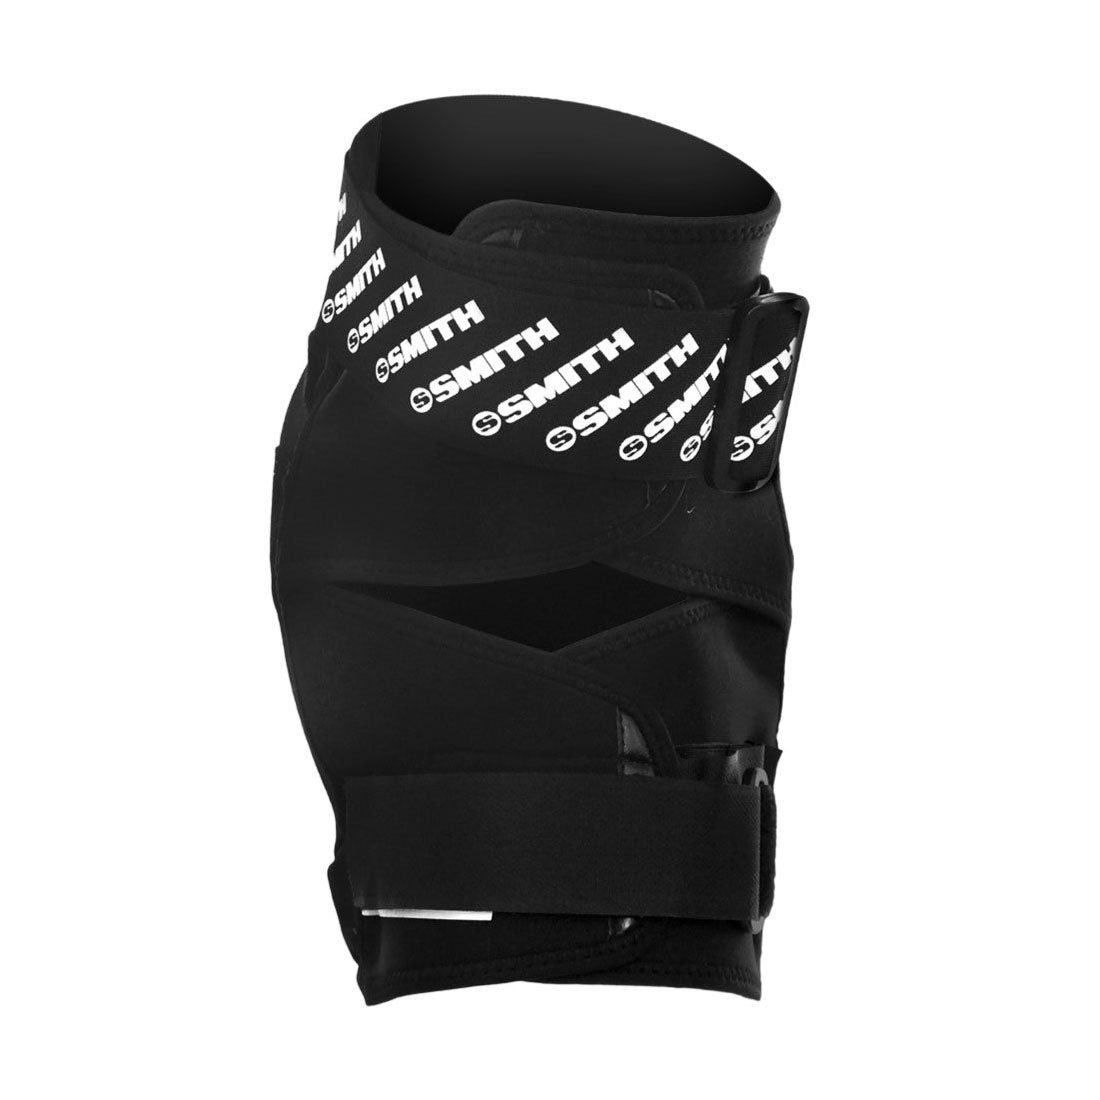 Smith Scabs Elite 2 Knee - Black Protective Gear